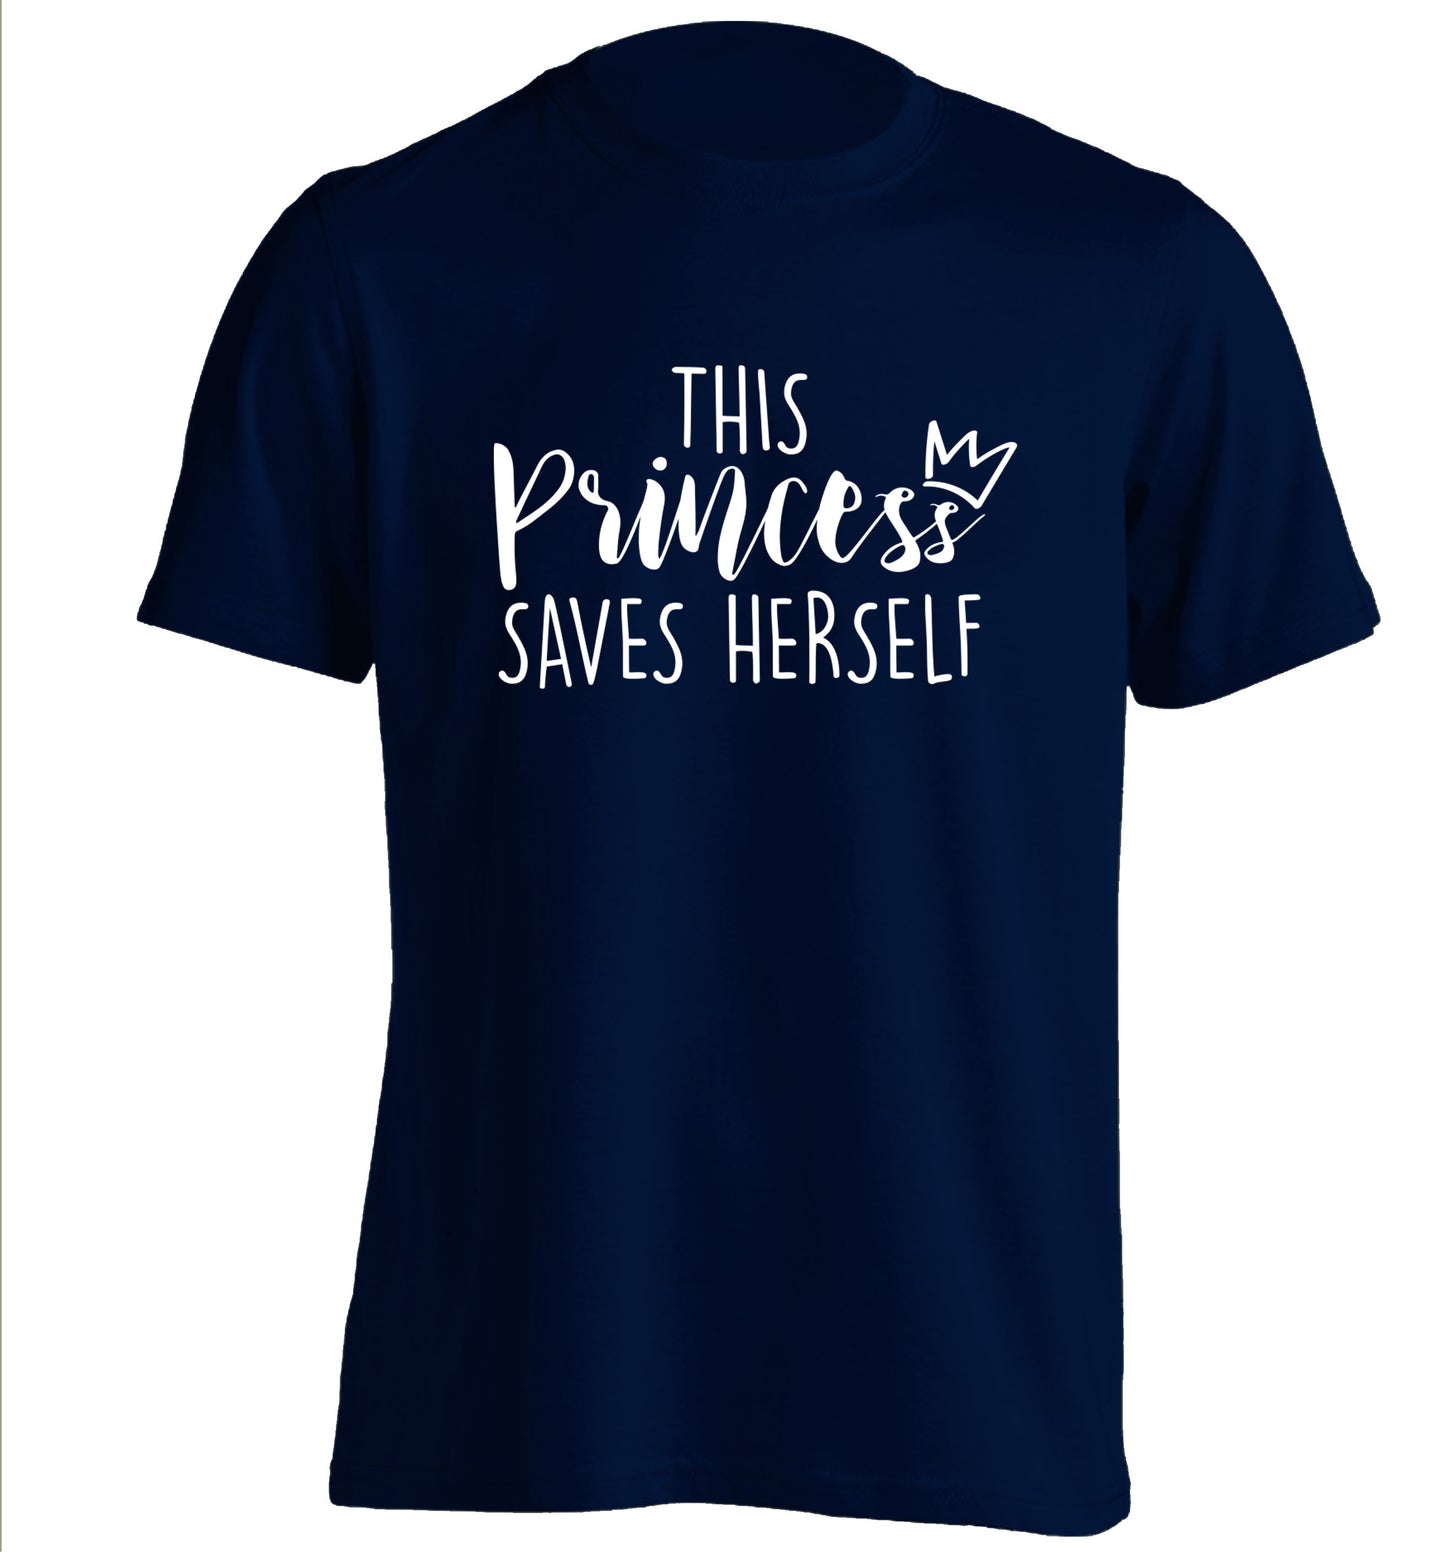 This princess saves herself adults unisex navy Tshirt 2XL